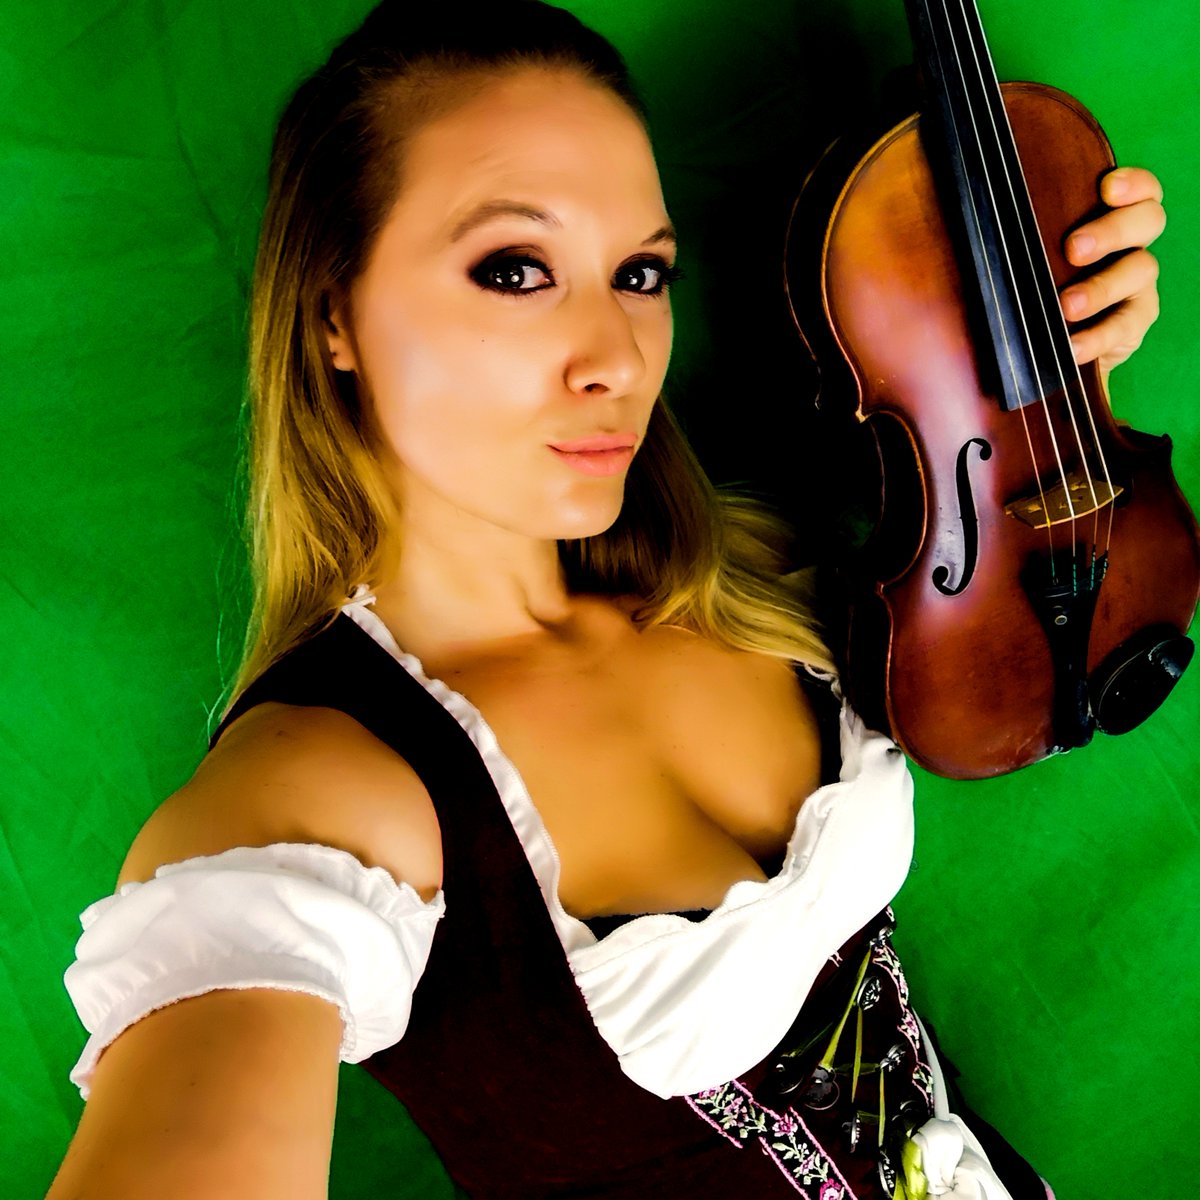 Happy October Guys 🍻
.
.
.
#violin #violinist #october #oktober #oktoberfest #femalecomposer #dirndl 
#violinmusic #violinista #violinstagram #orchestra